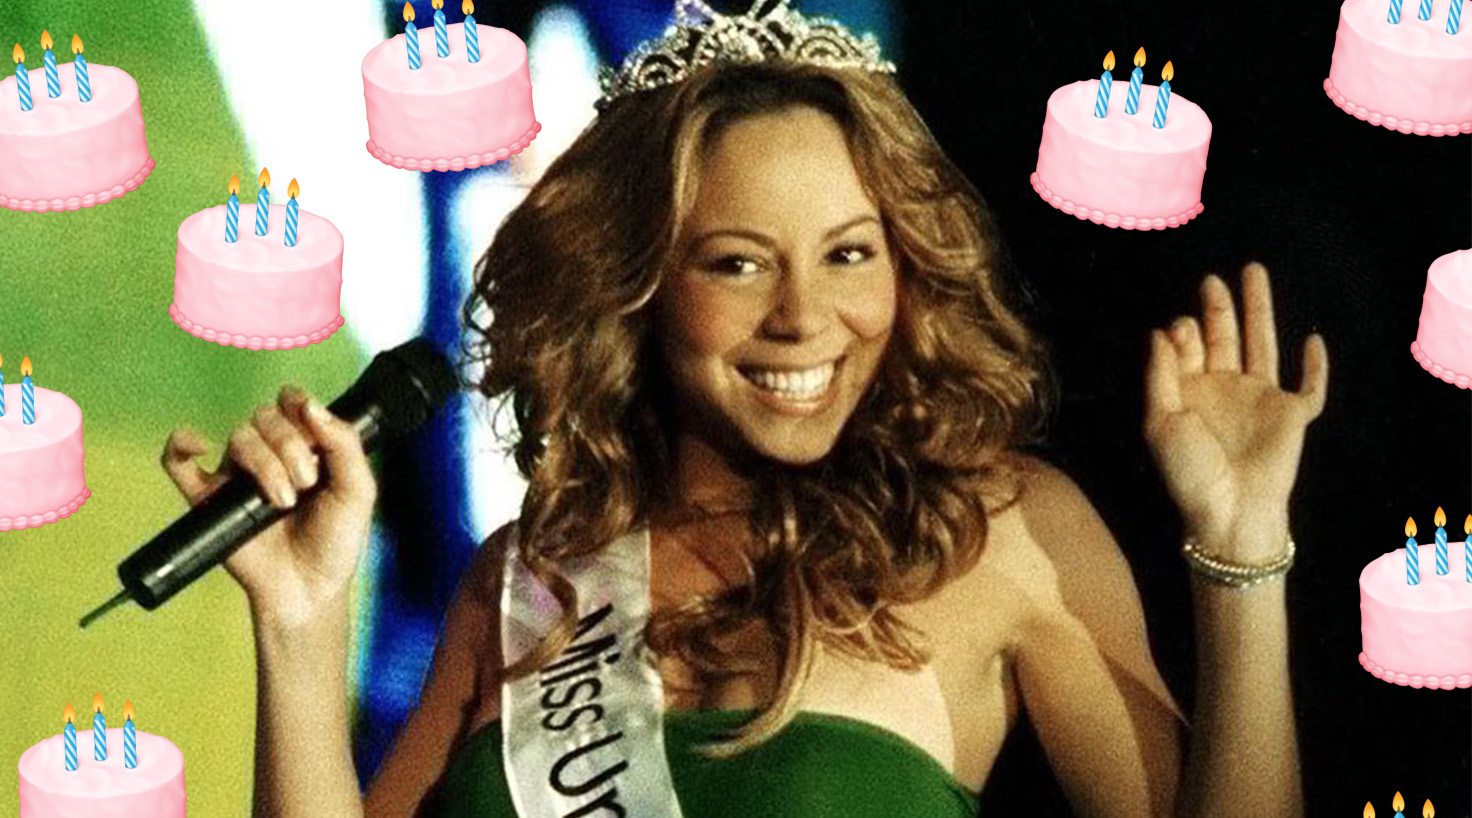 Mariah Carey birthday cake